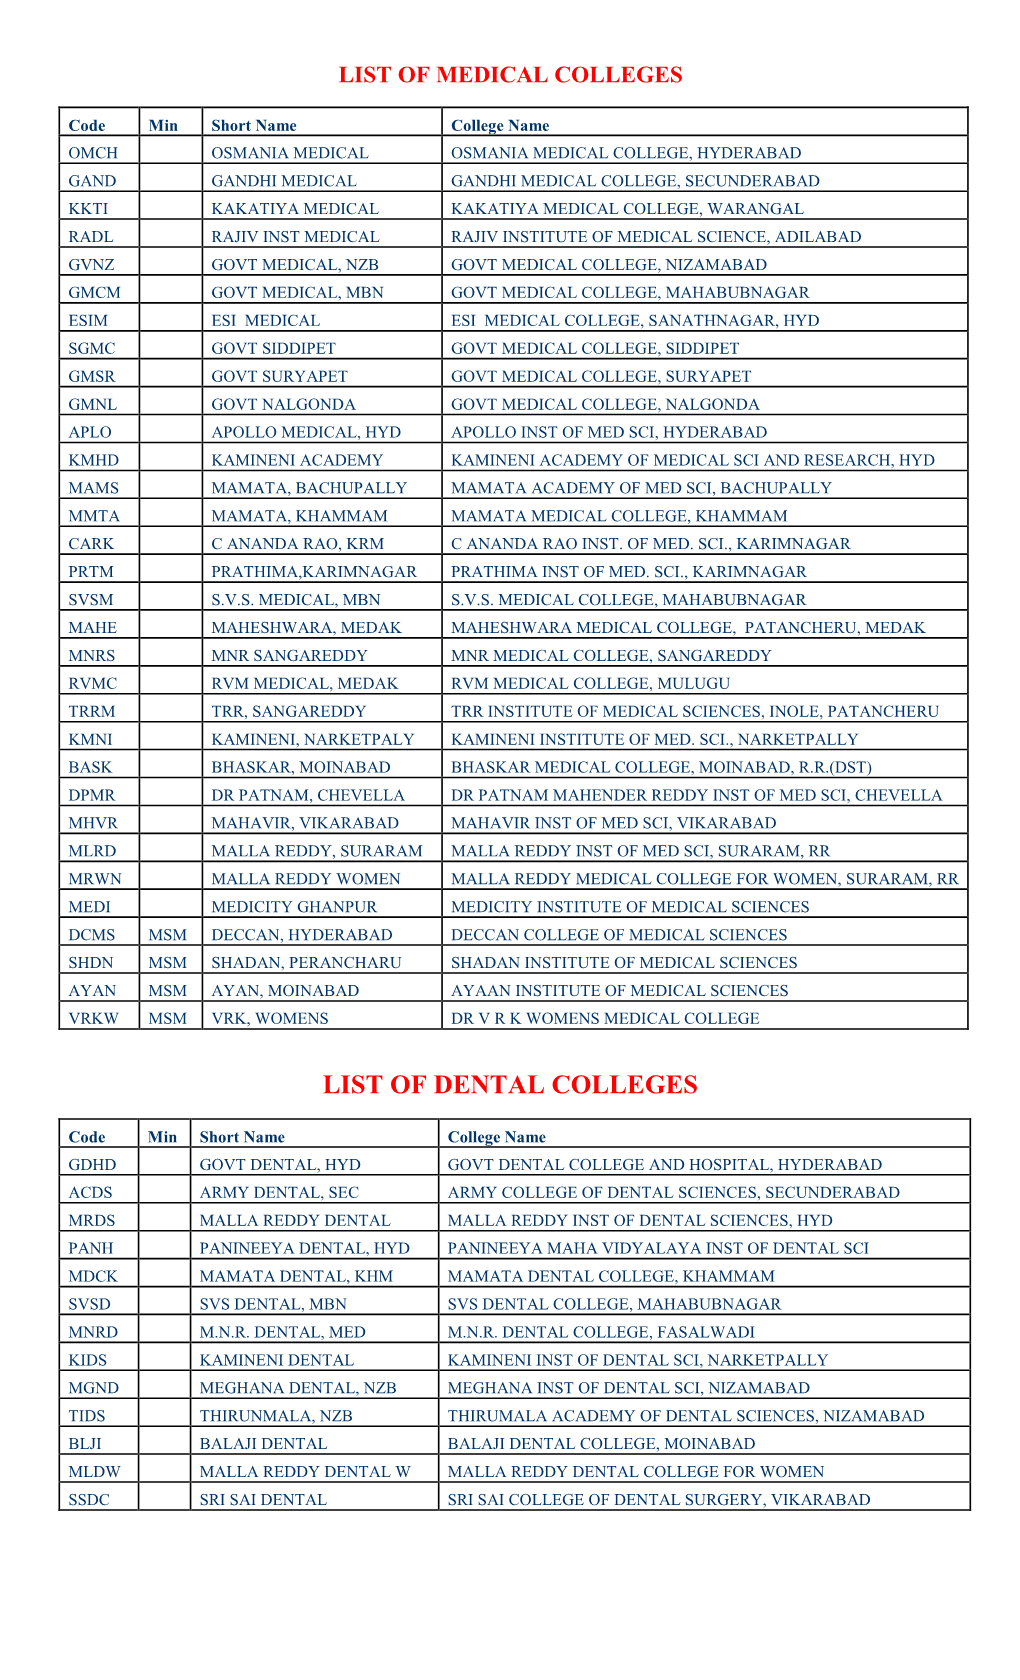 List of Dental Colleges